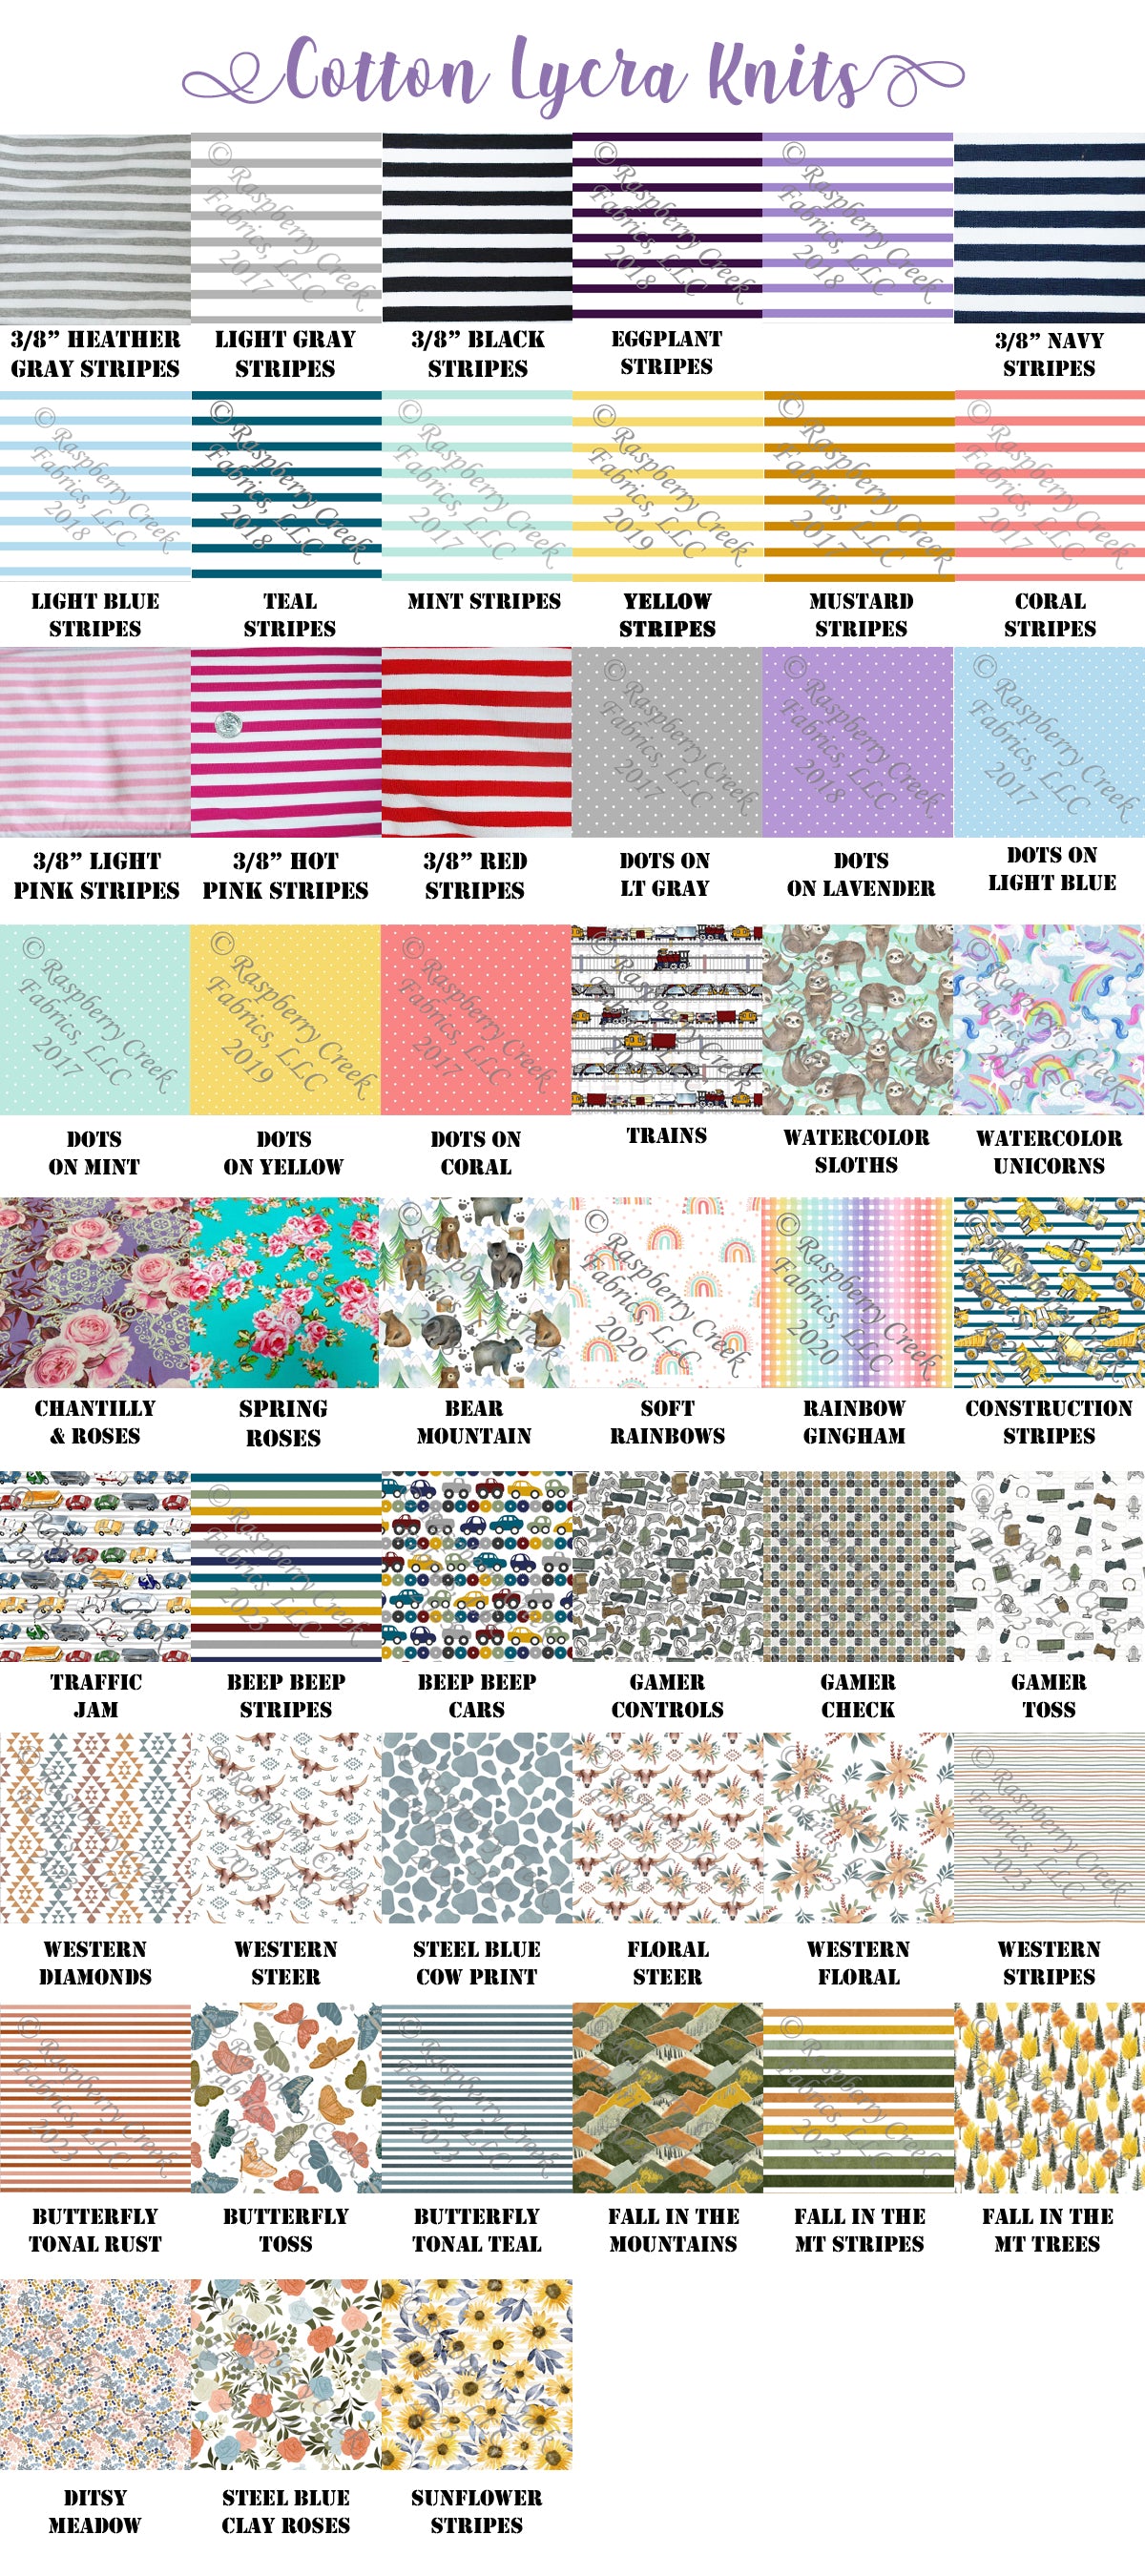 Sweet Dreams Sleep Sack - Basic Knit Prints